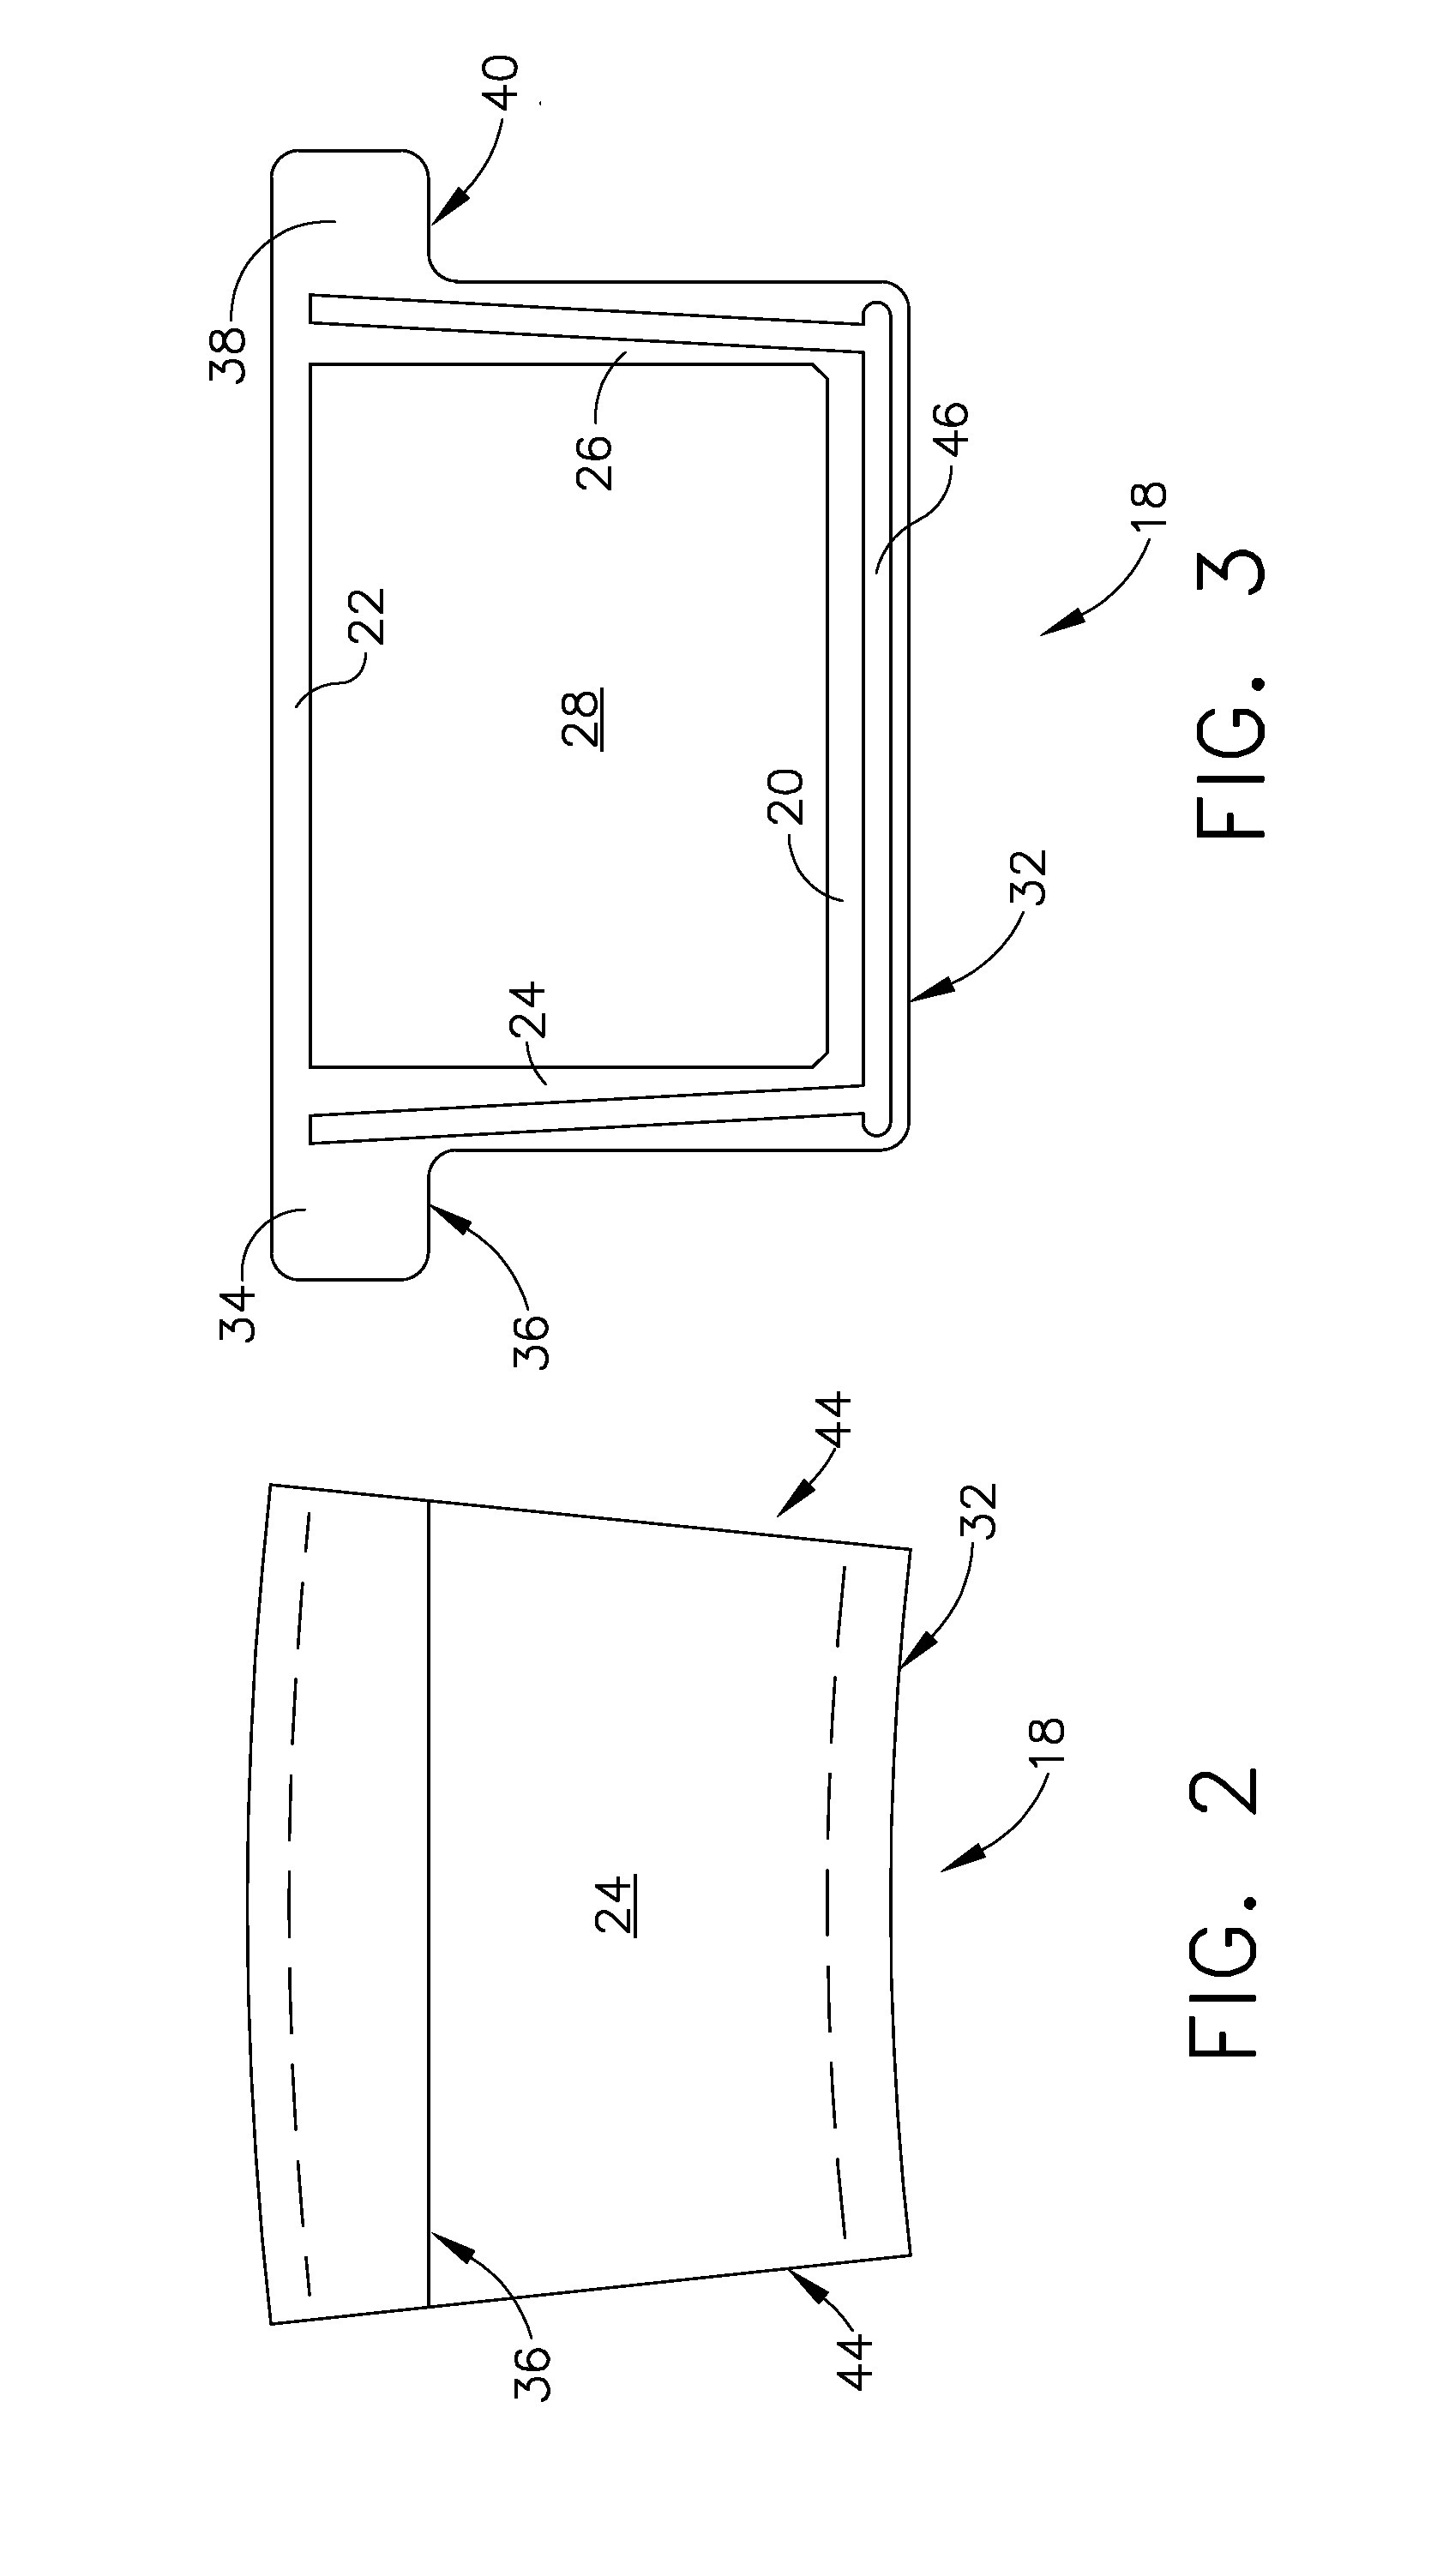 Chordal mounting arrangement for low-ductility turbine shroud